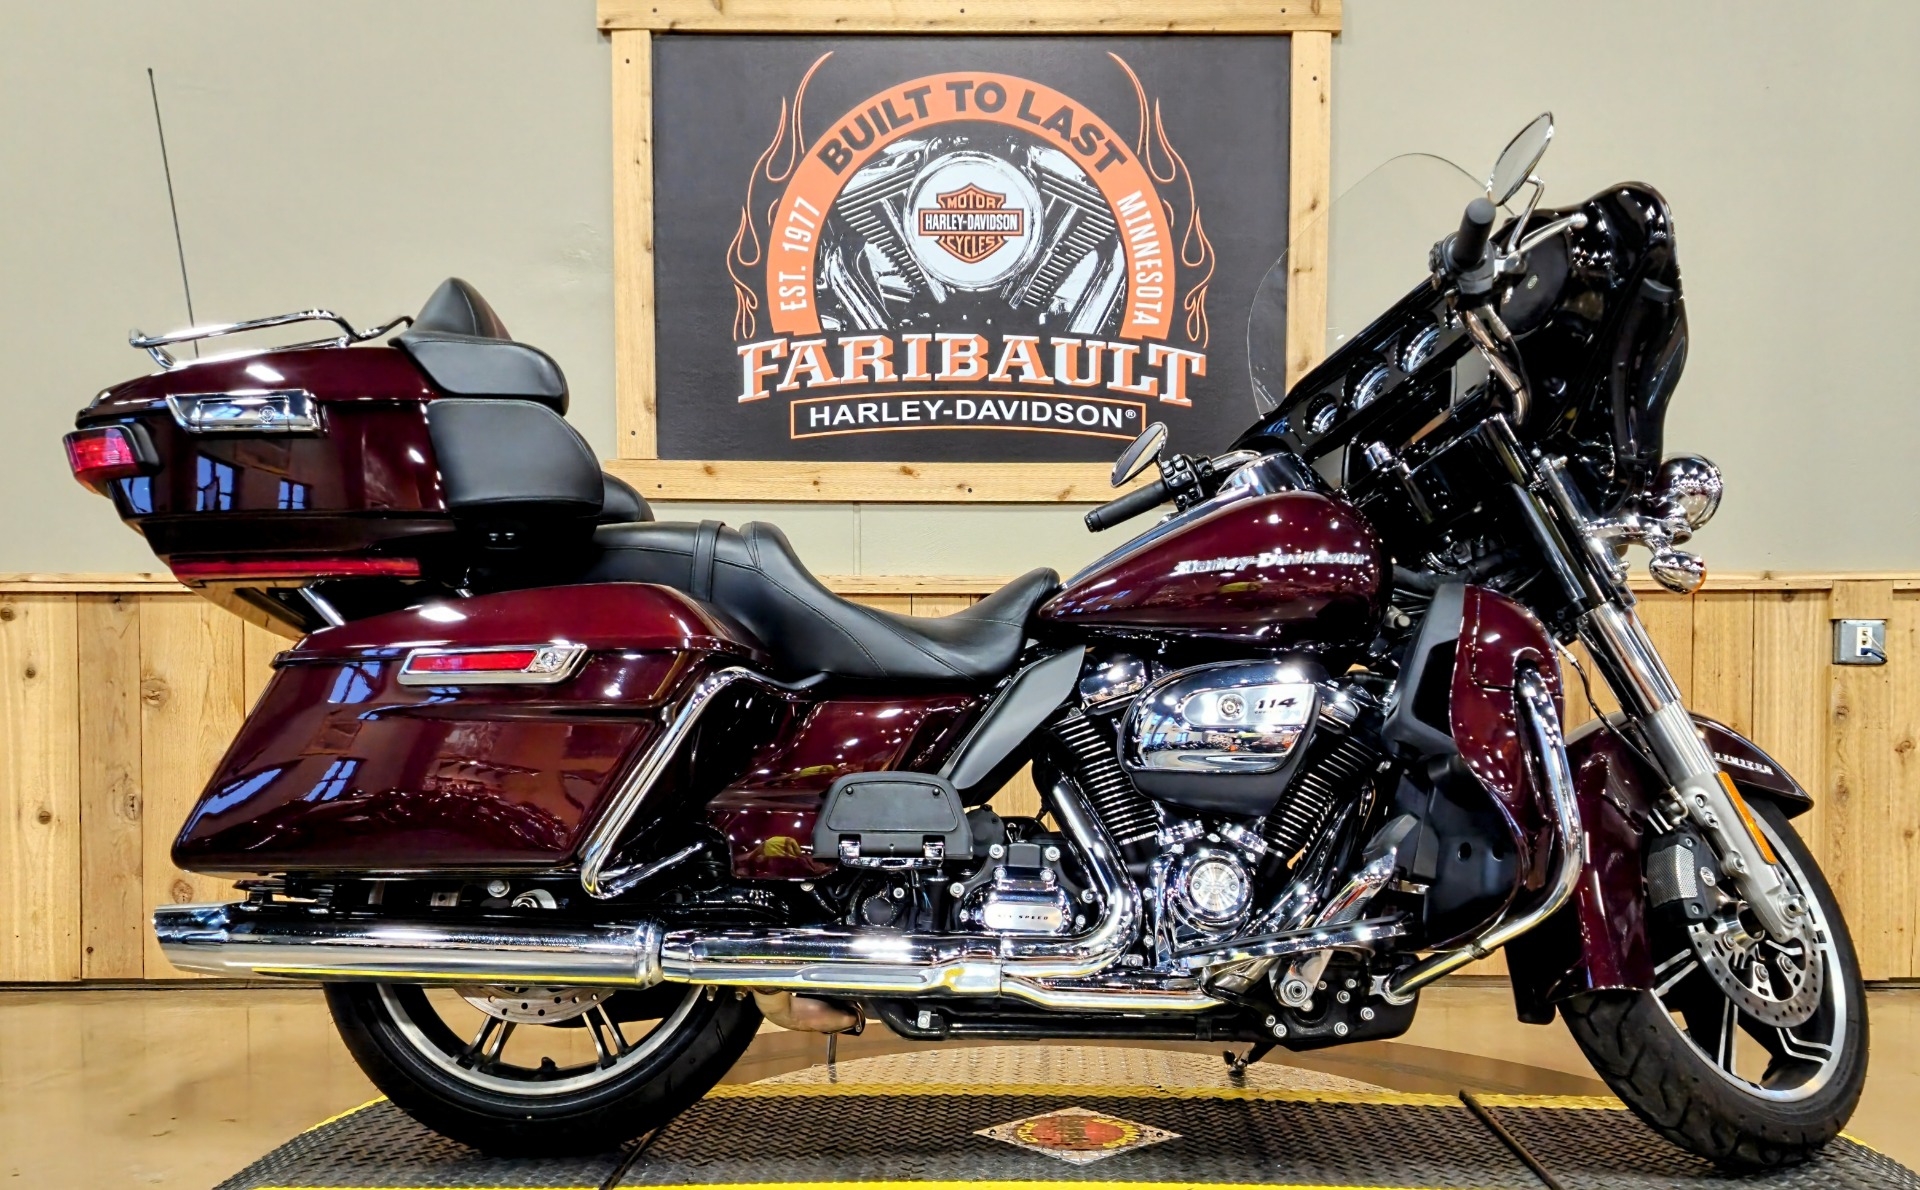 2021 Harley-Davidson Ultra Limited in Faribault, Minnesota - Photo 1